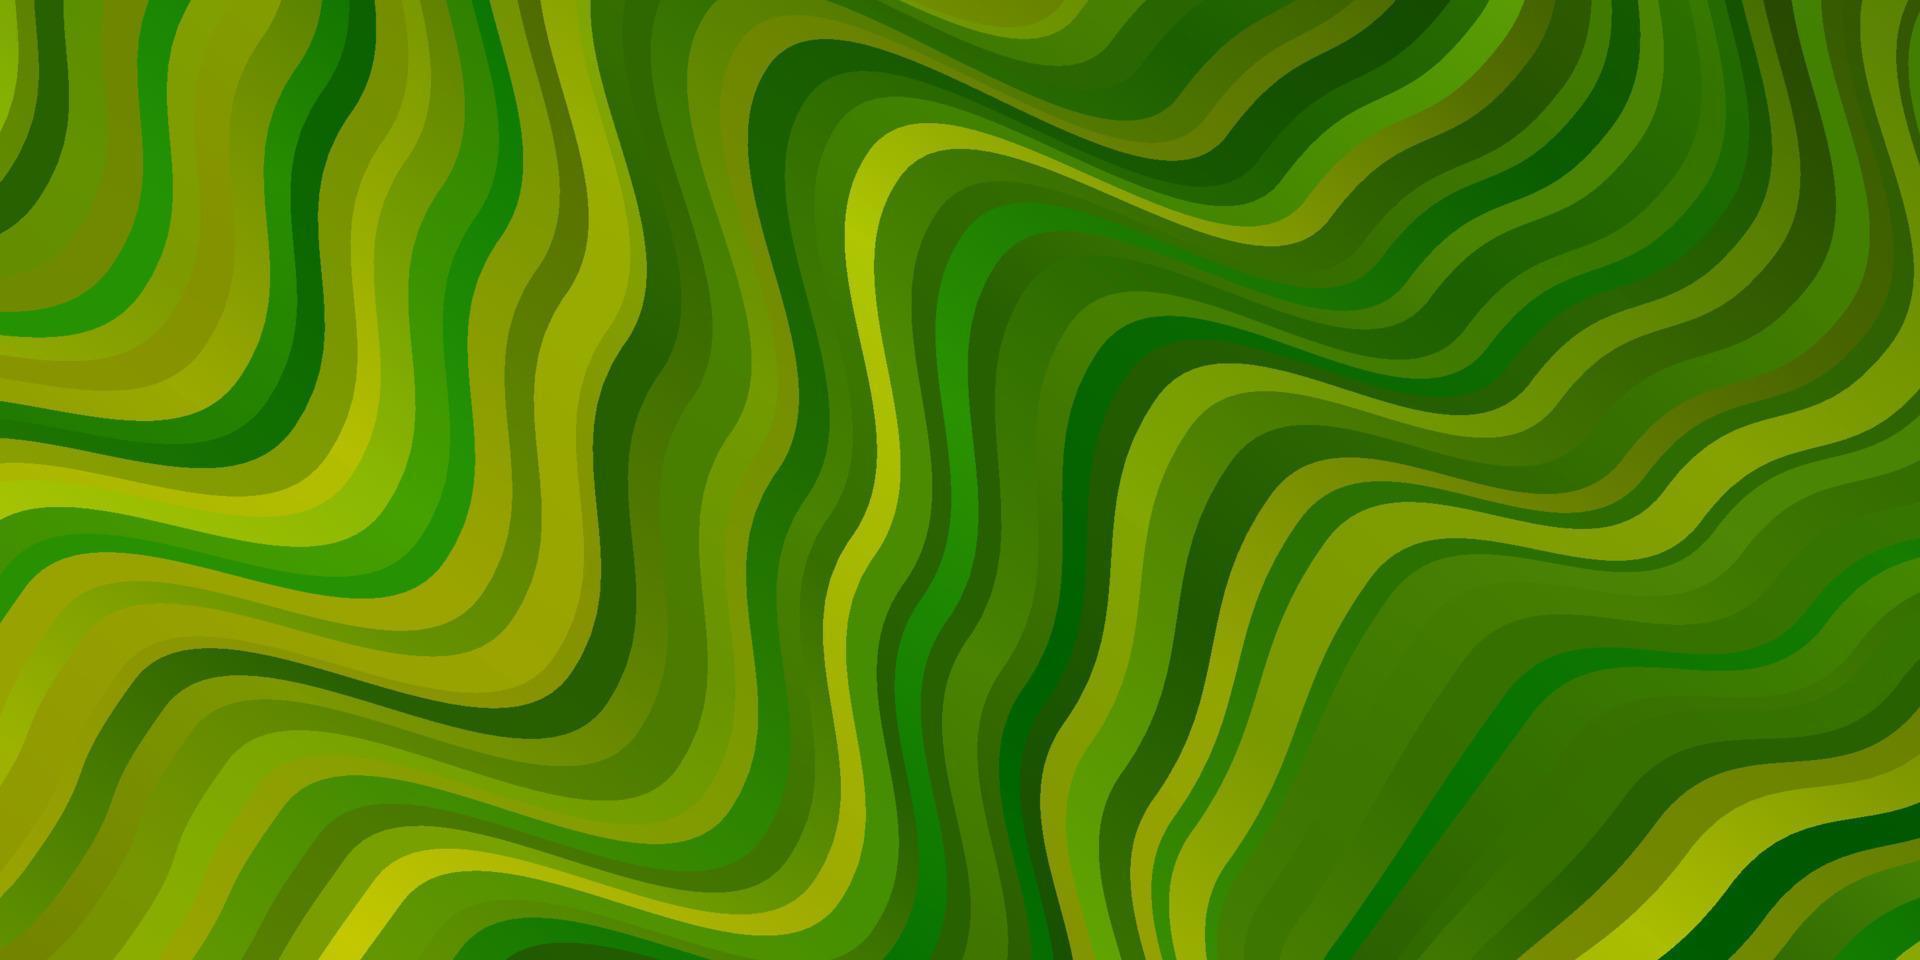 textura de vector verde claro, amarillo con líneas torcidas.